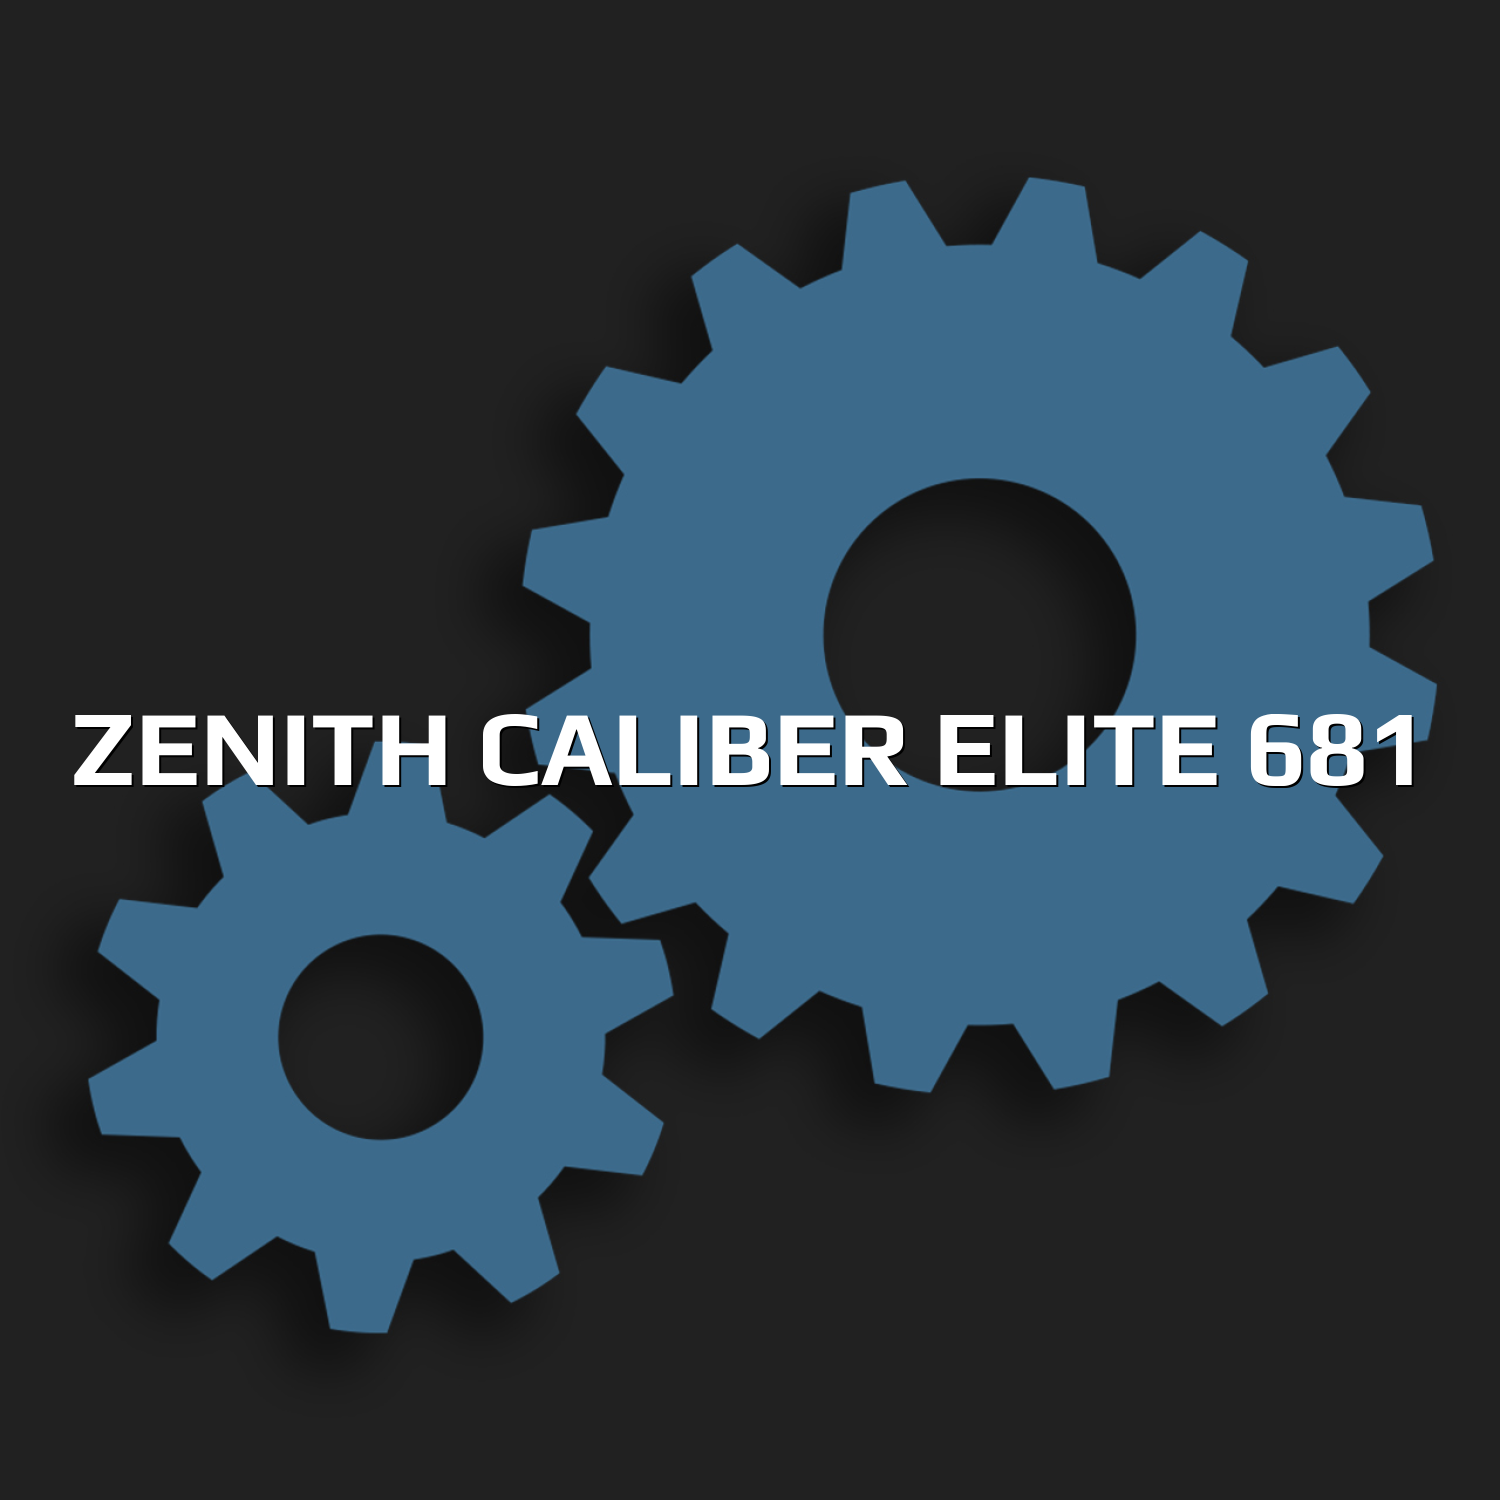 Zenith Caliber Elite 681